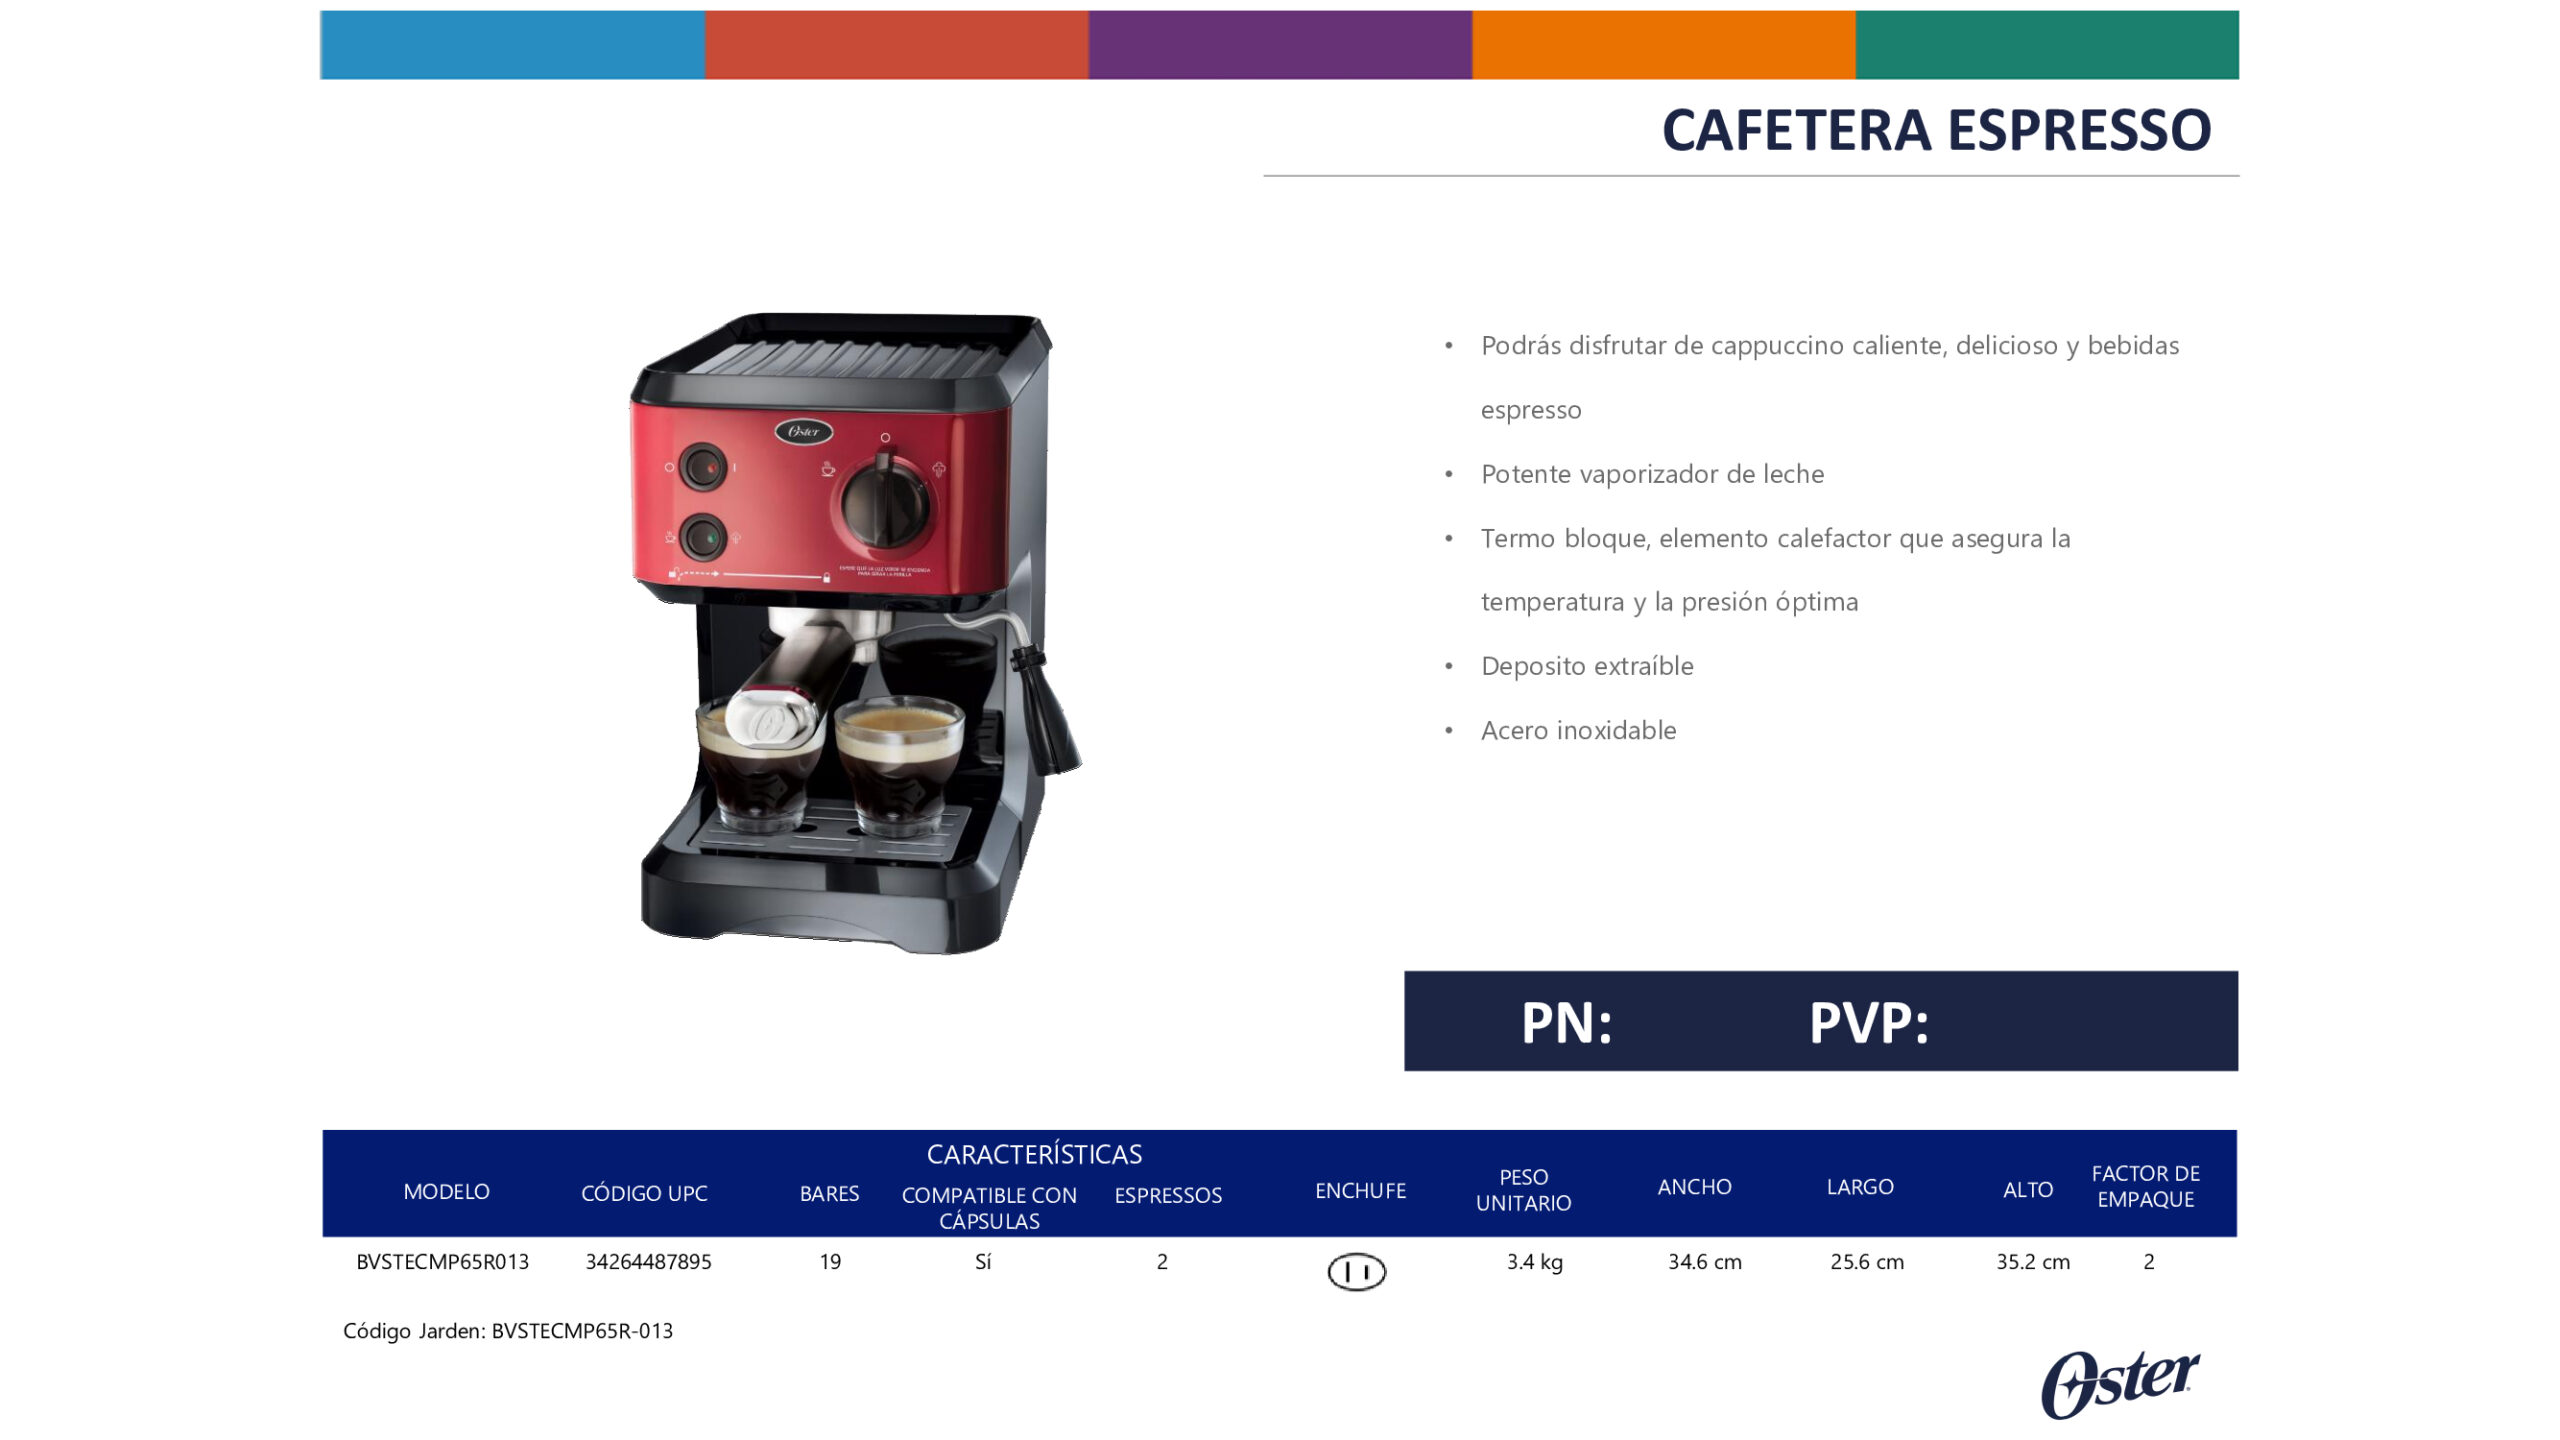 Cafetera espresso Oster BVSTECMP65R-013